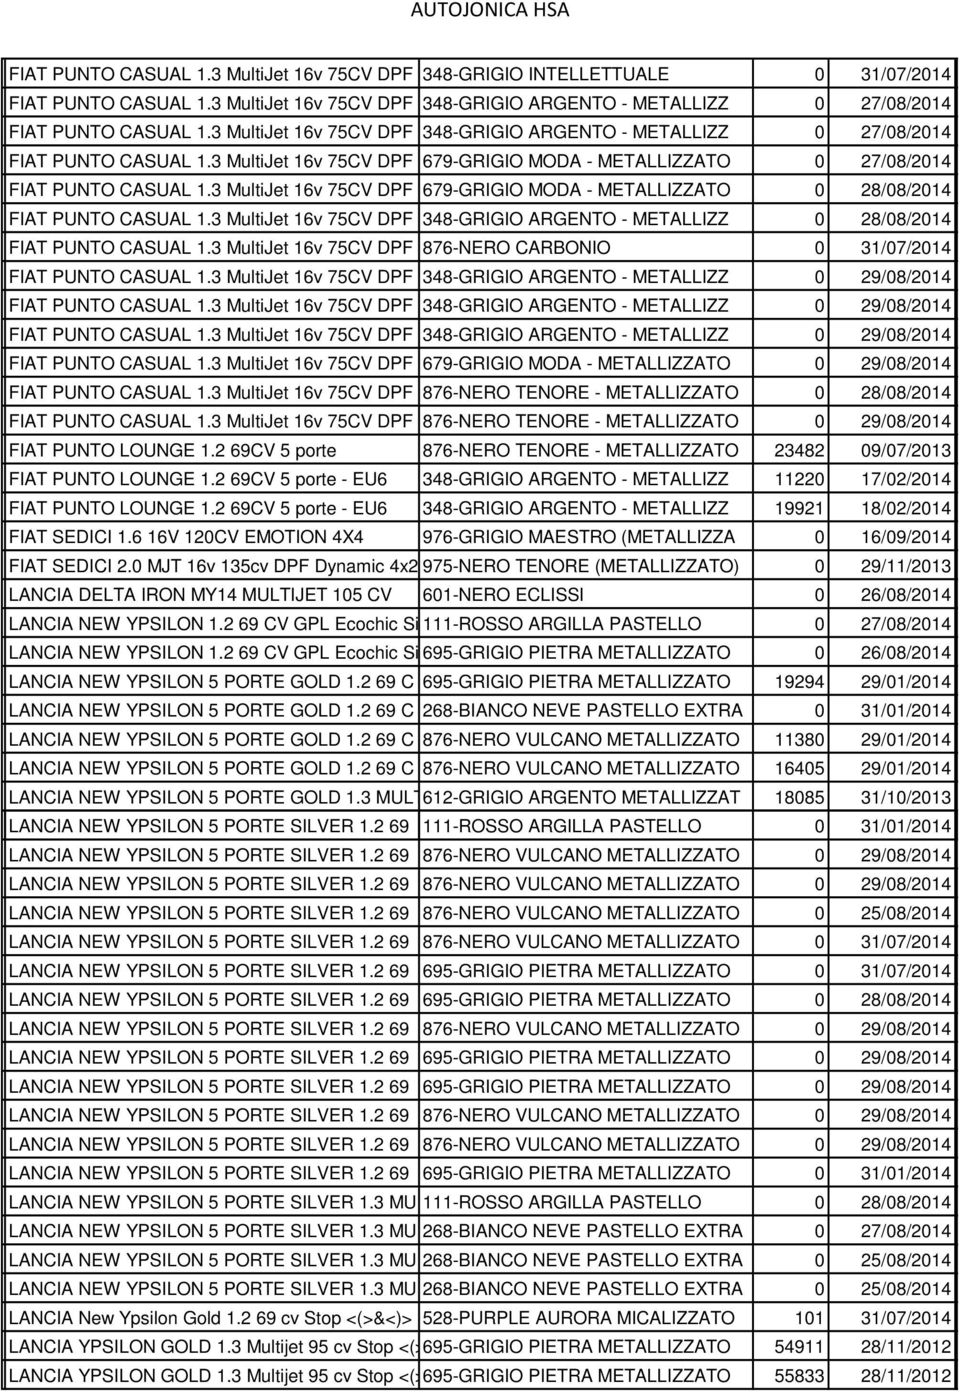 3 MultiJet 16v 75CV DPF 5679-GRIGIO porte MODA - METALLIZZATO 0 28/08/2014 FIAT PUNTO CASUAL 1.3 MultiJet 16v 75CV DPF 5348-GRIGIO porte ARGENTO - METALLIZZ 0 28/08/2014 FIAT PUNTO CASUAL 1.